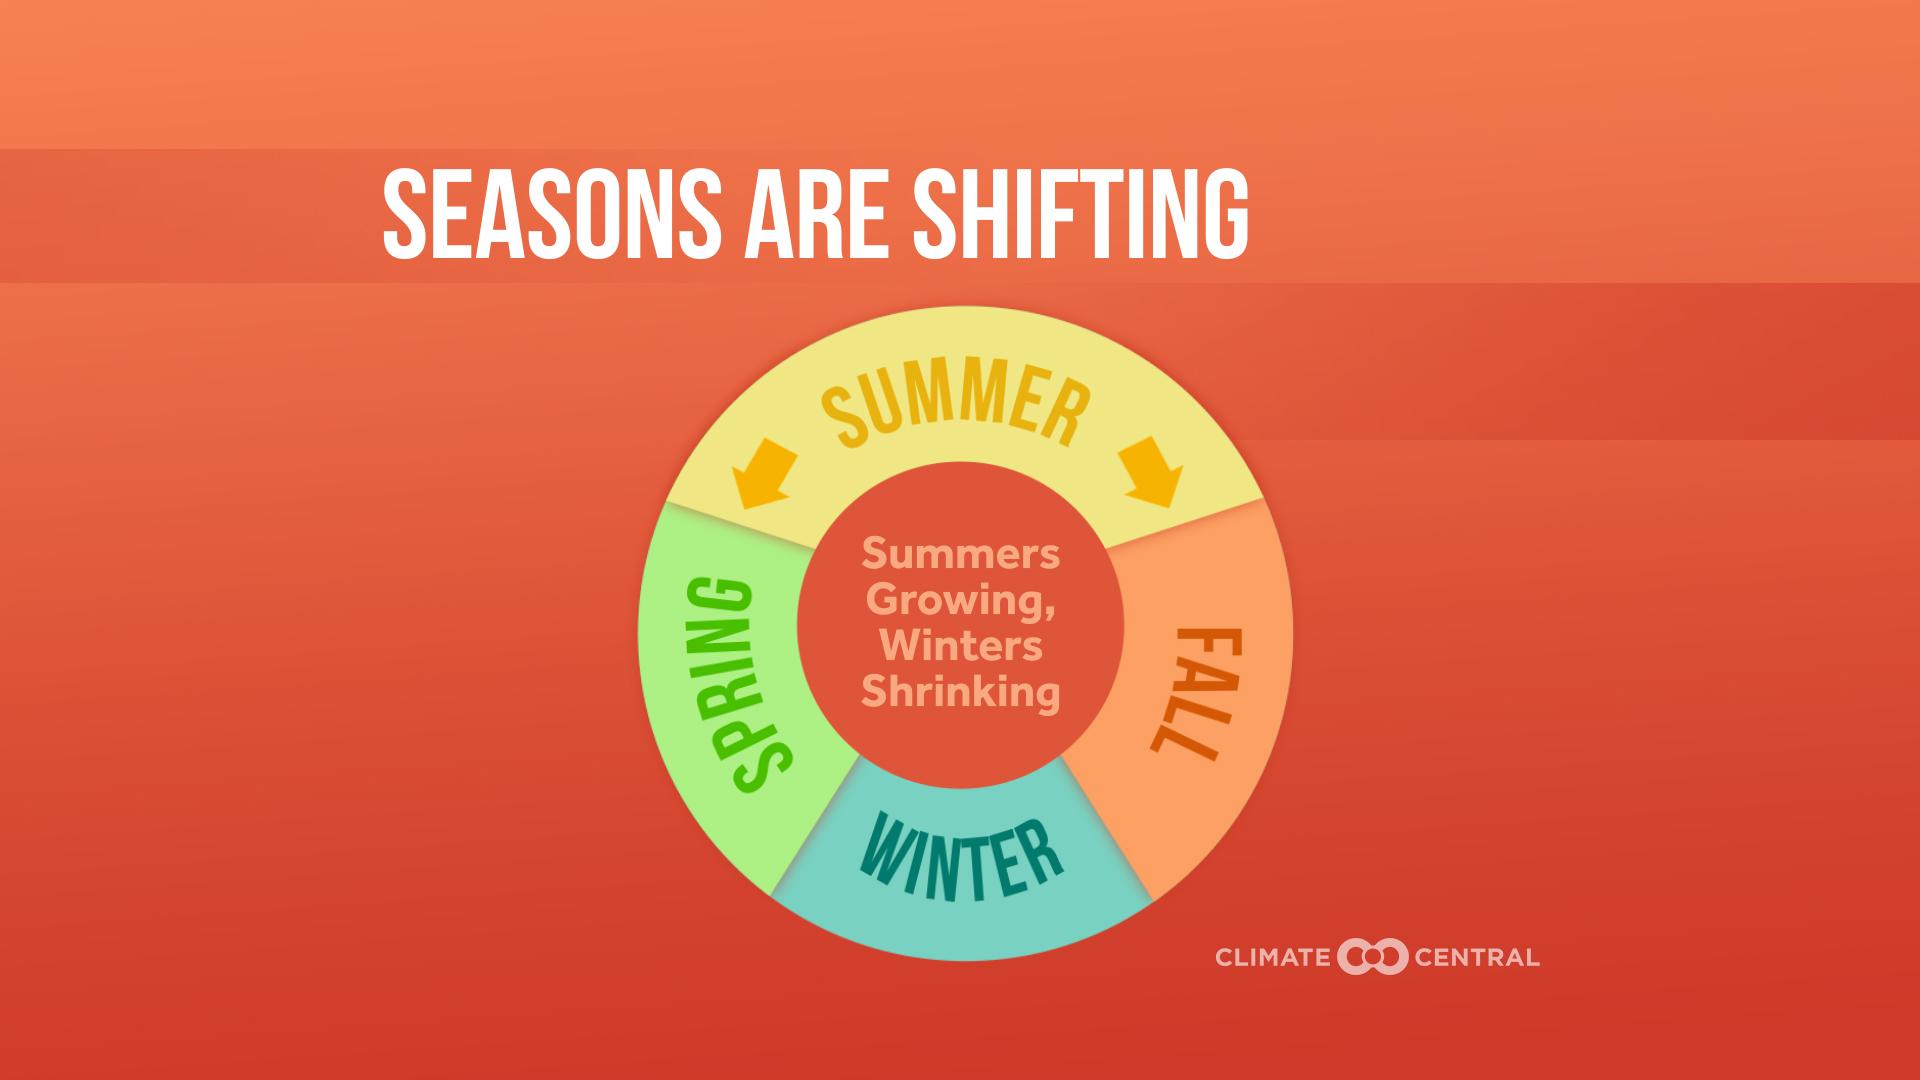 Set 3 - Longer Summers